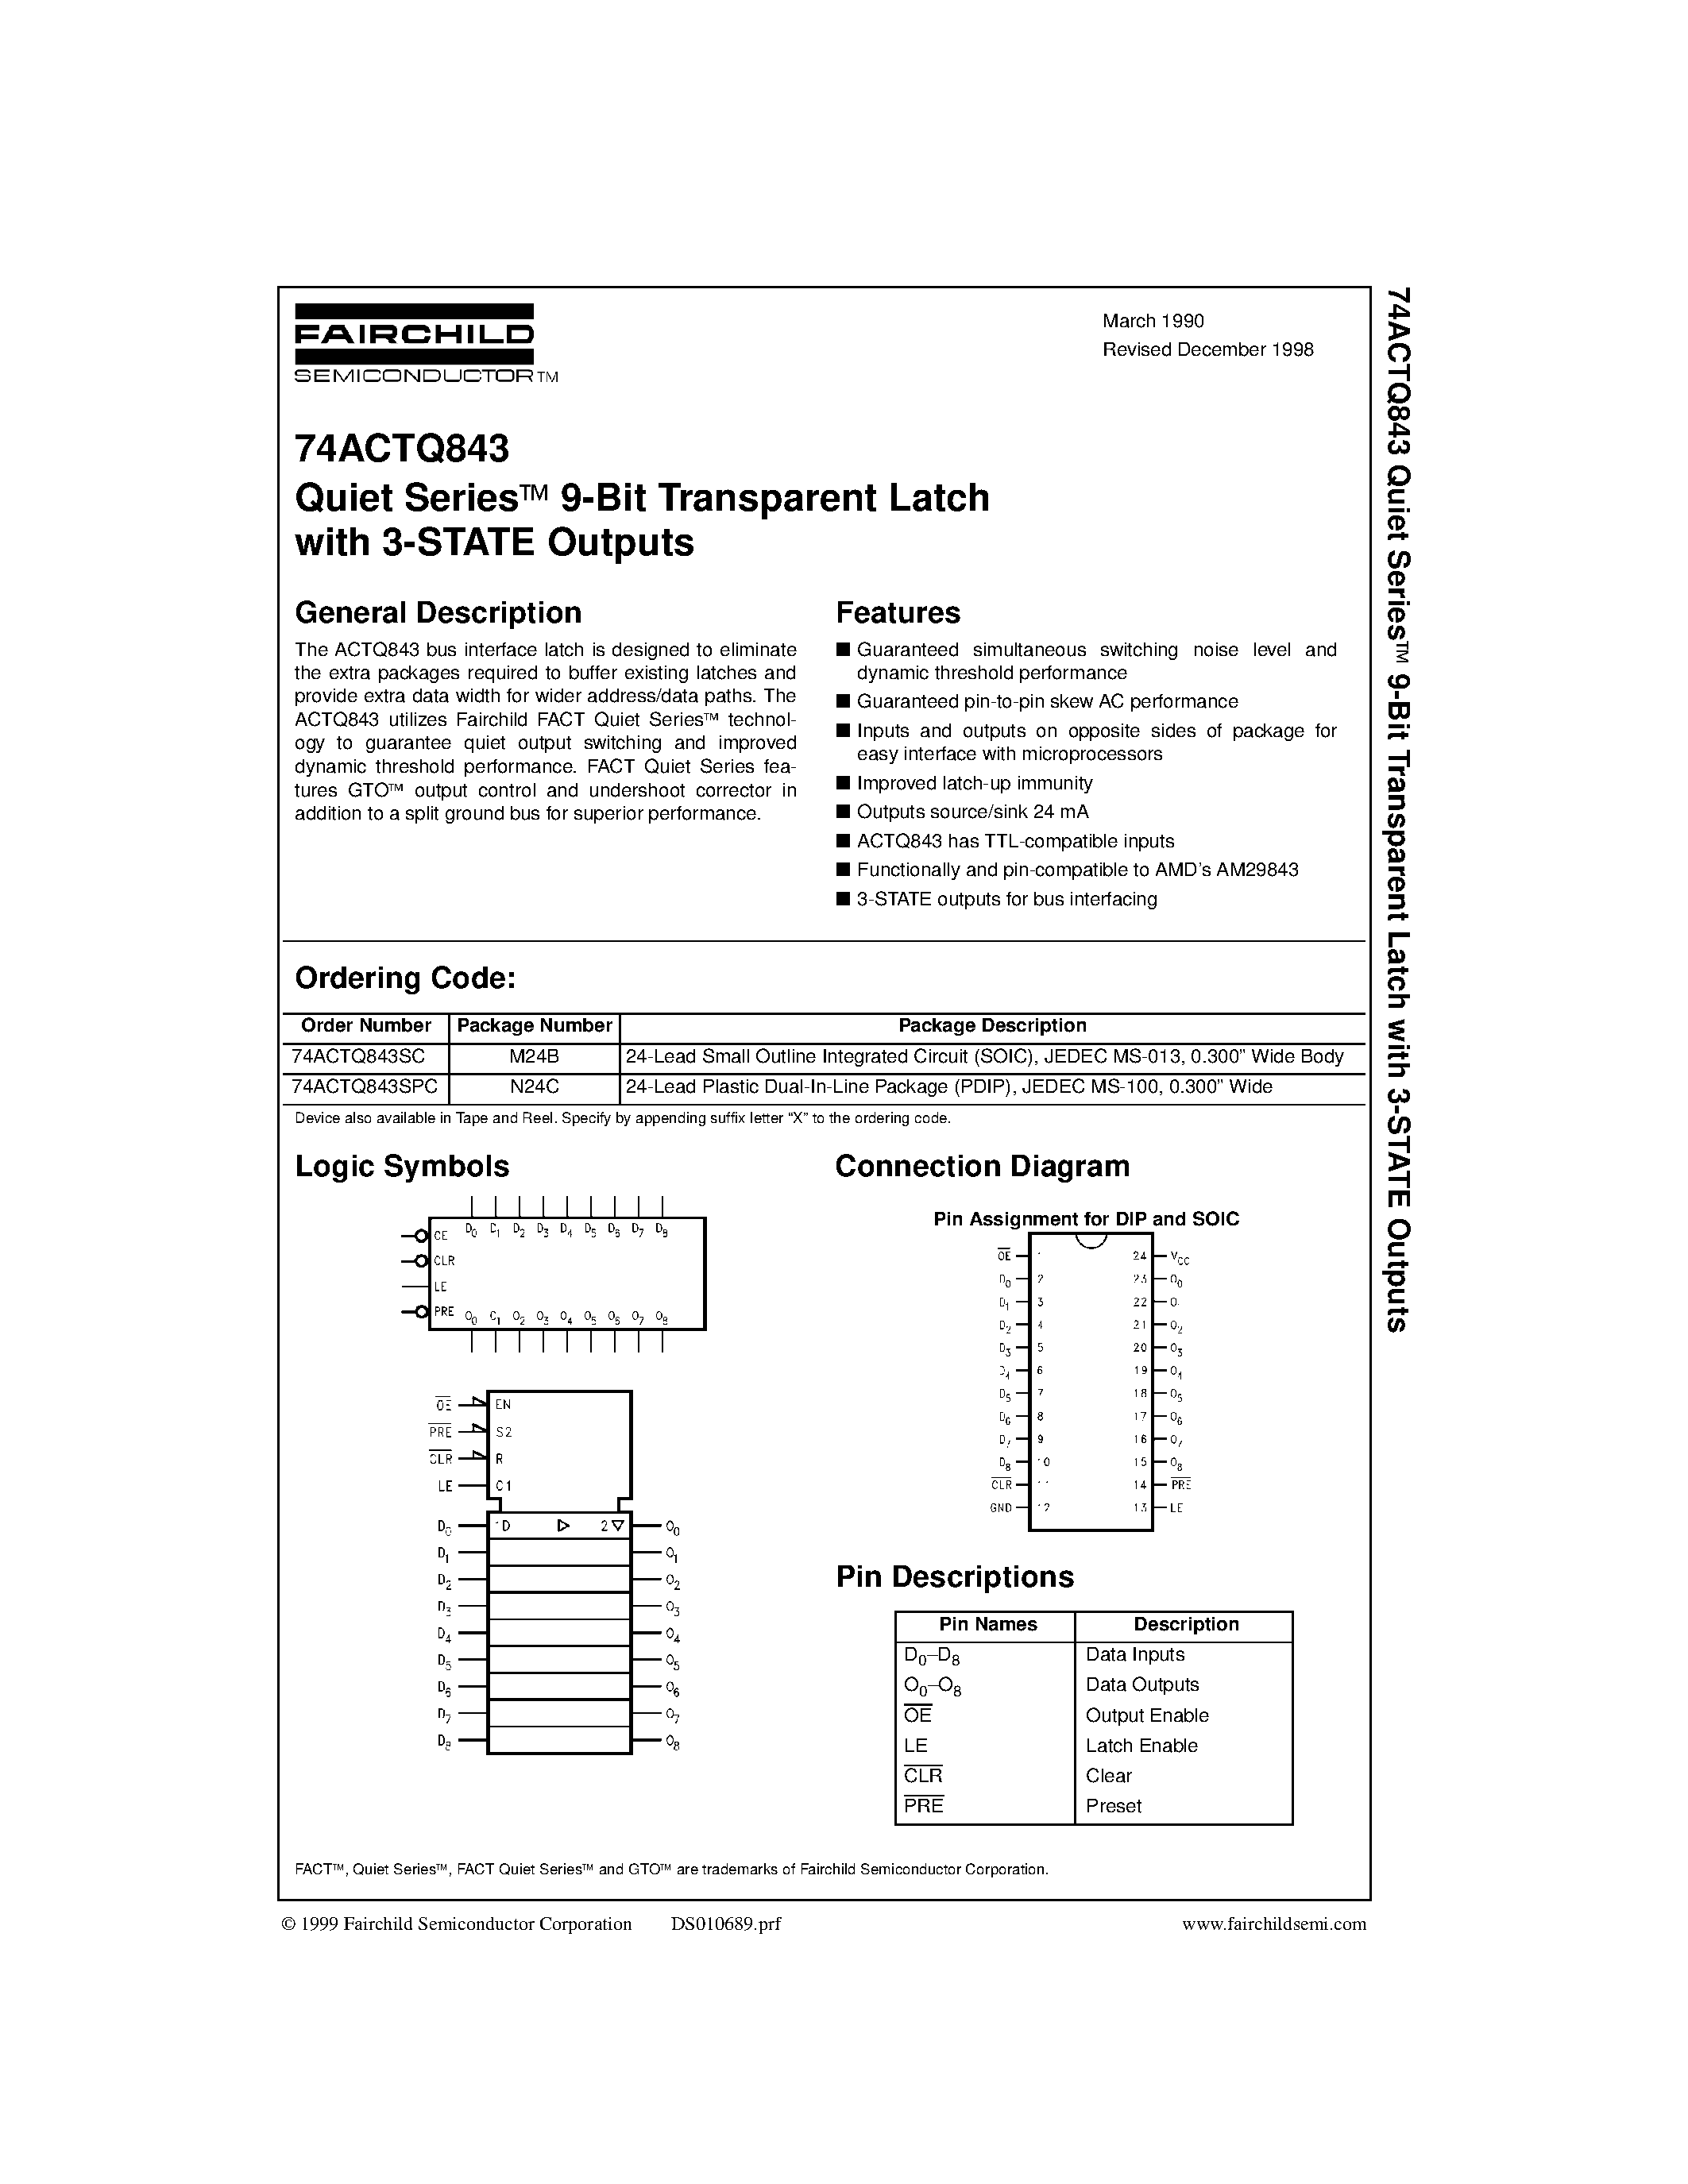 Даташит 74ACTQ843SC - Quiet Seriesa 9-Bit Transparent Latch with 3-STATE Outputs страница 1